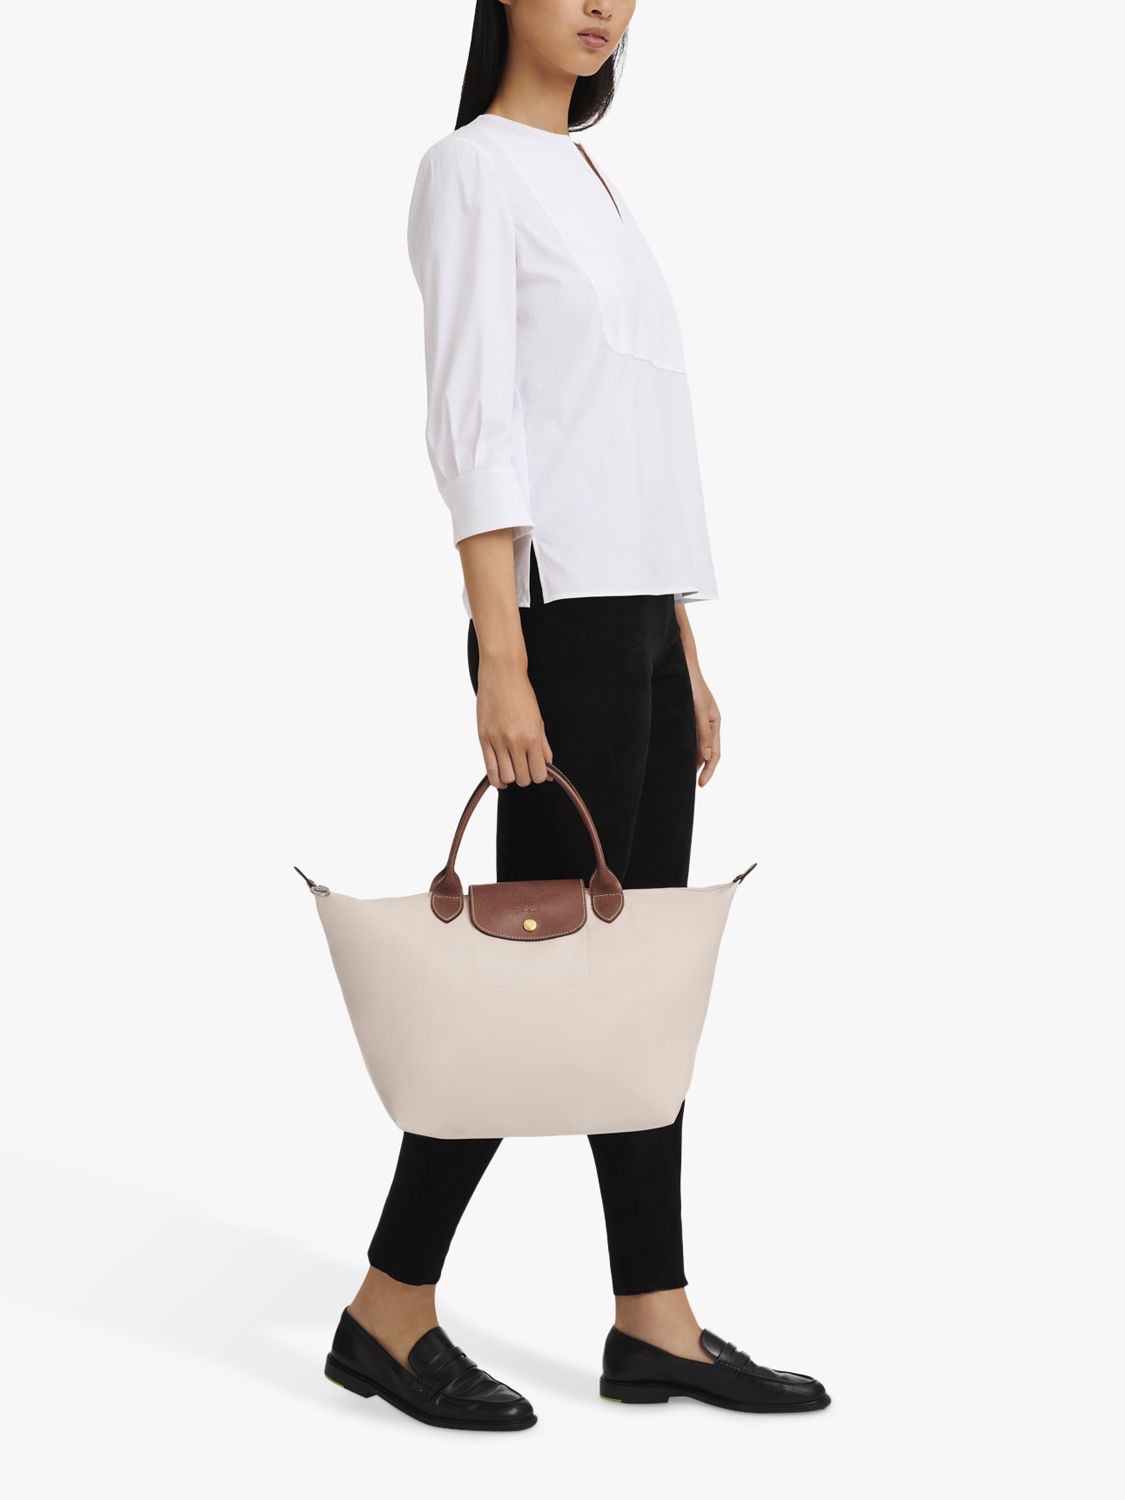 Longchamp Le Pliage Small Size Comparison  Small Top Handle VS Small Long  Handle Bags 